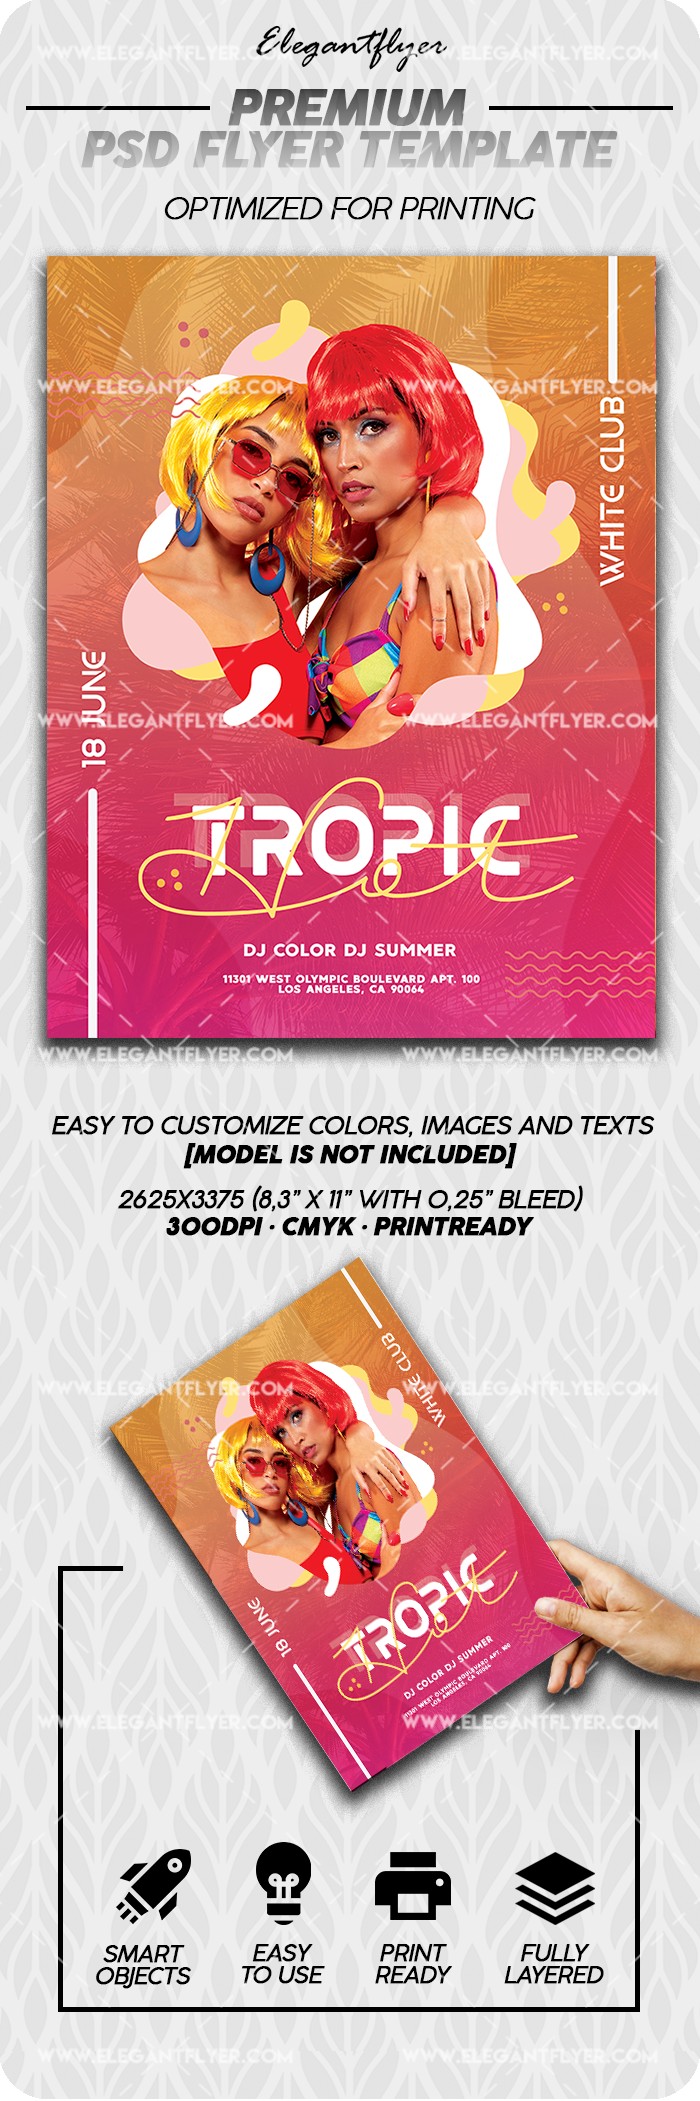 Hot Tropic by ElegantFlyer